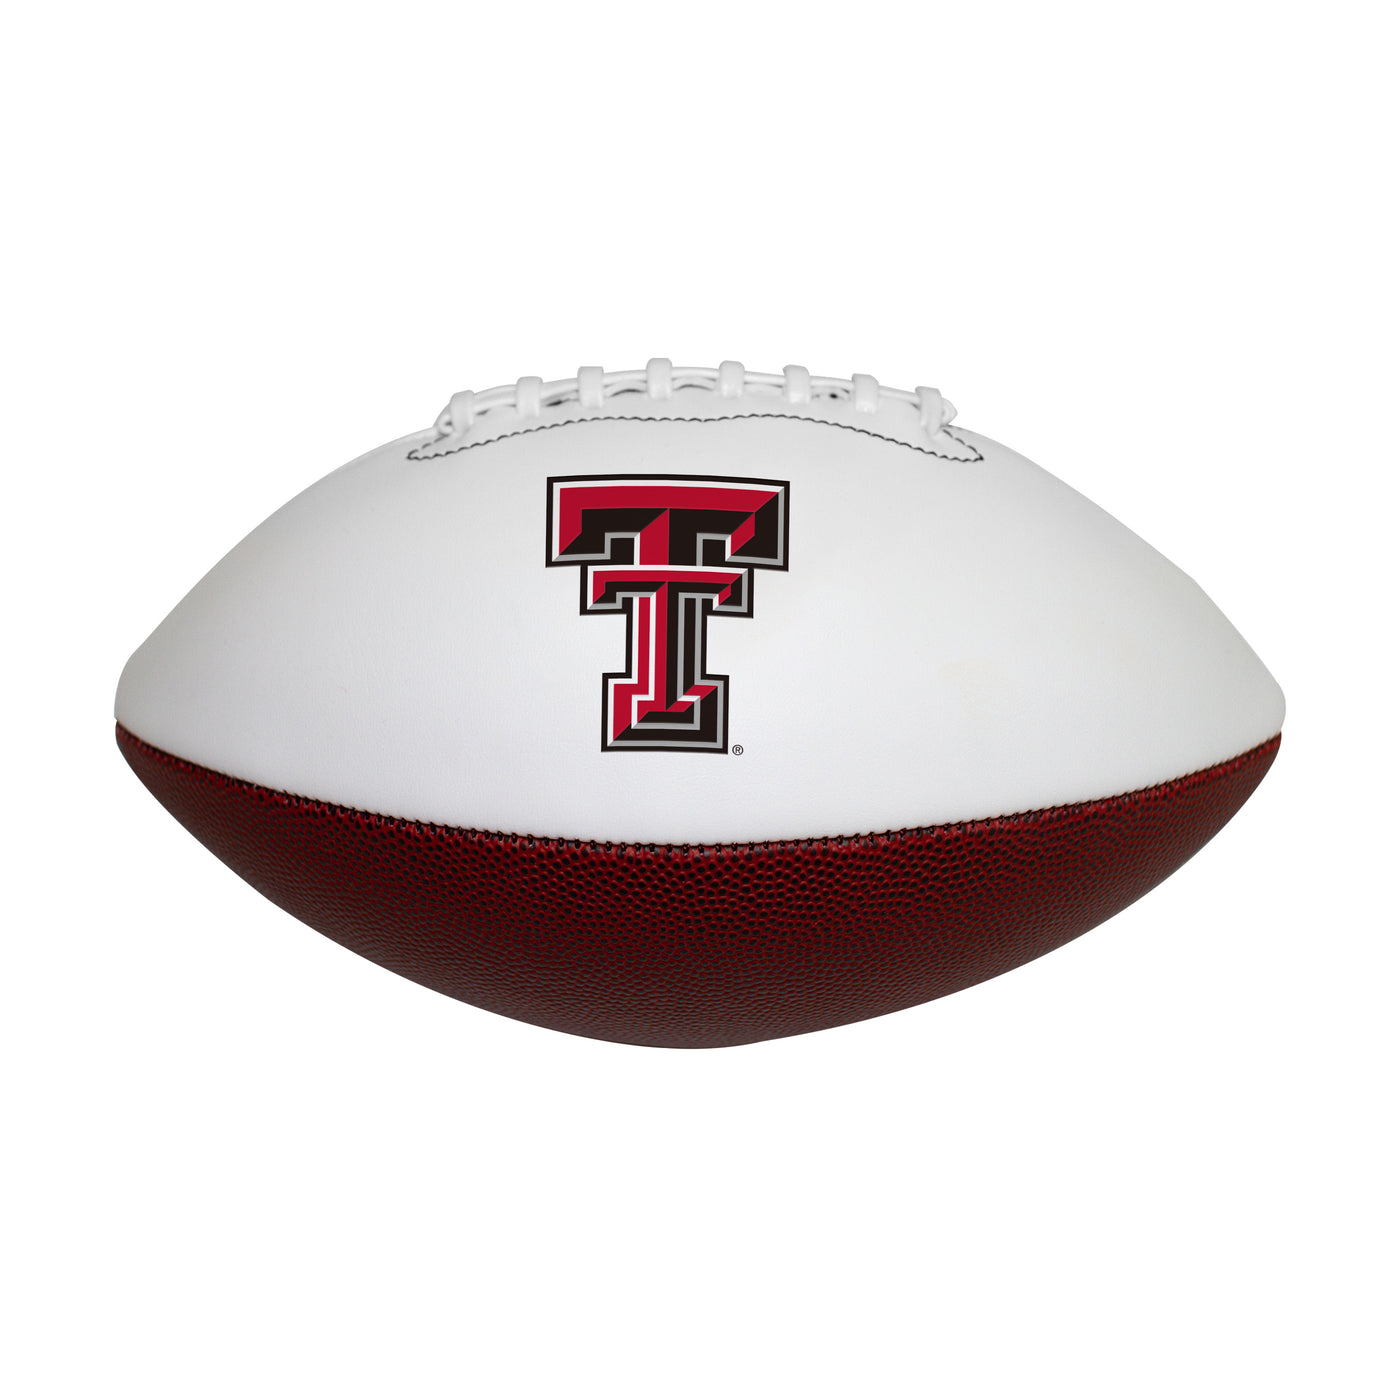 TX Tech Official-Size Autograph Football